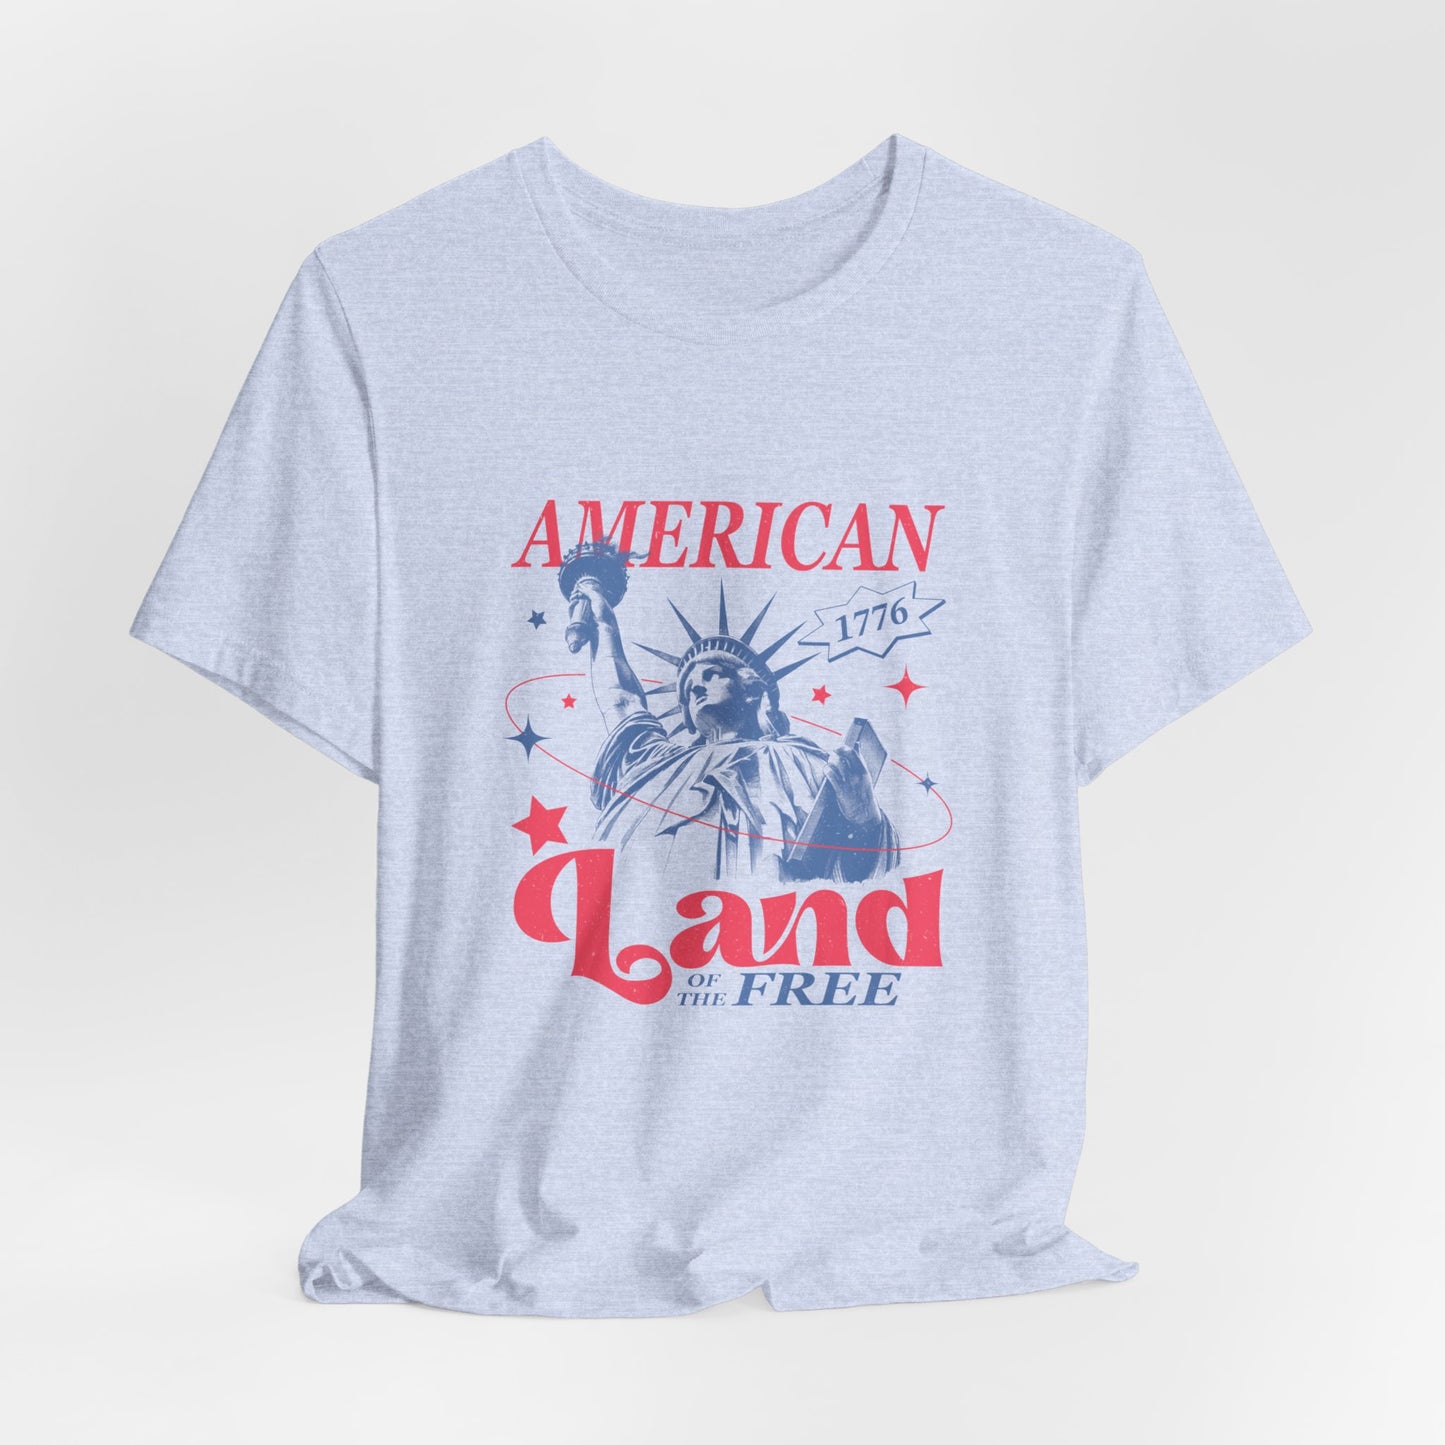 Land of the Free USA Women's Short Sleeve Tee